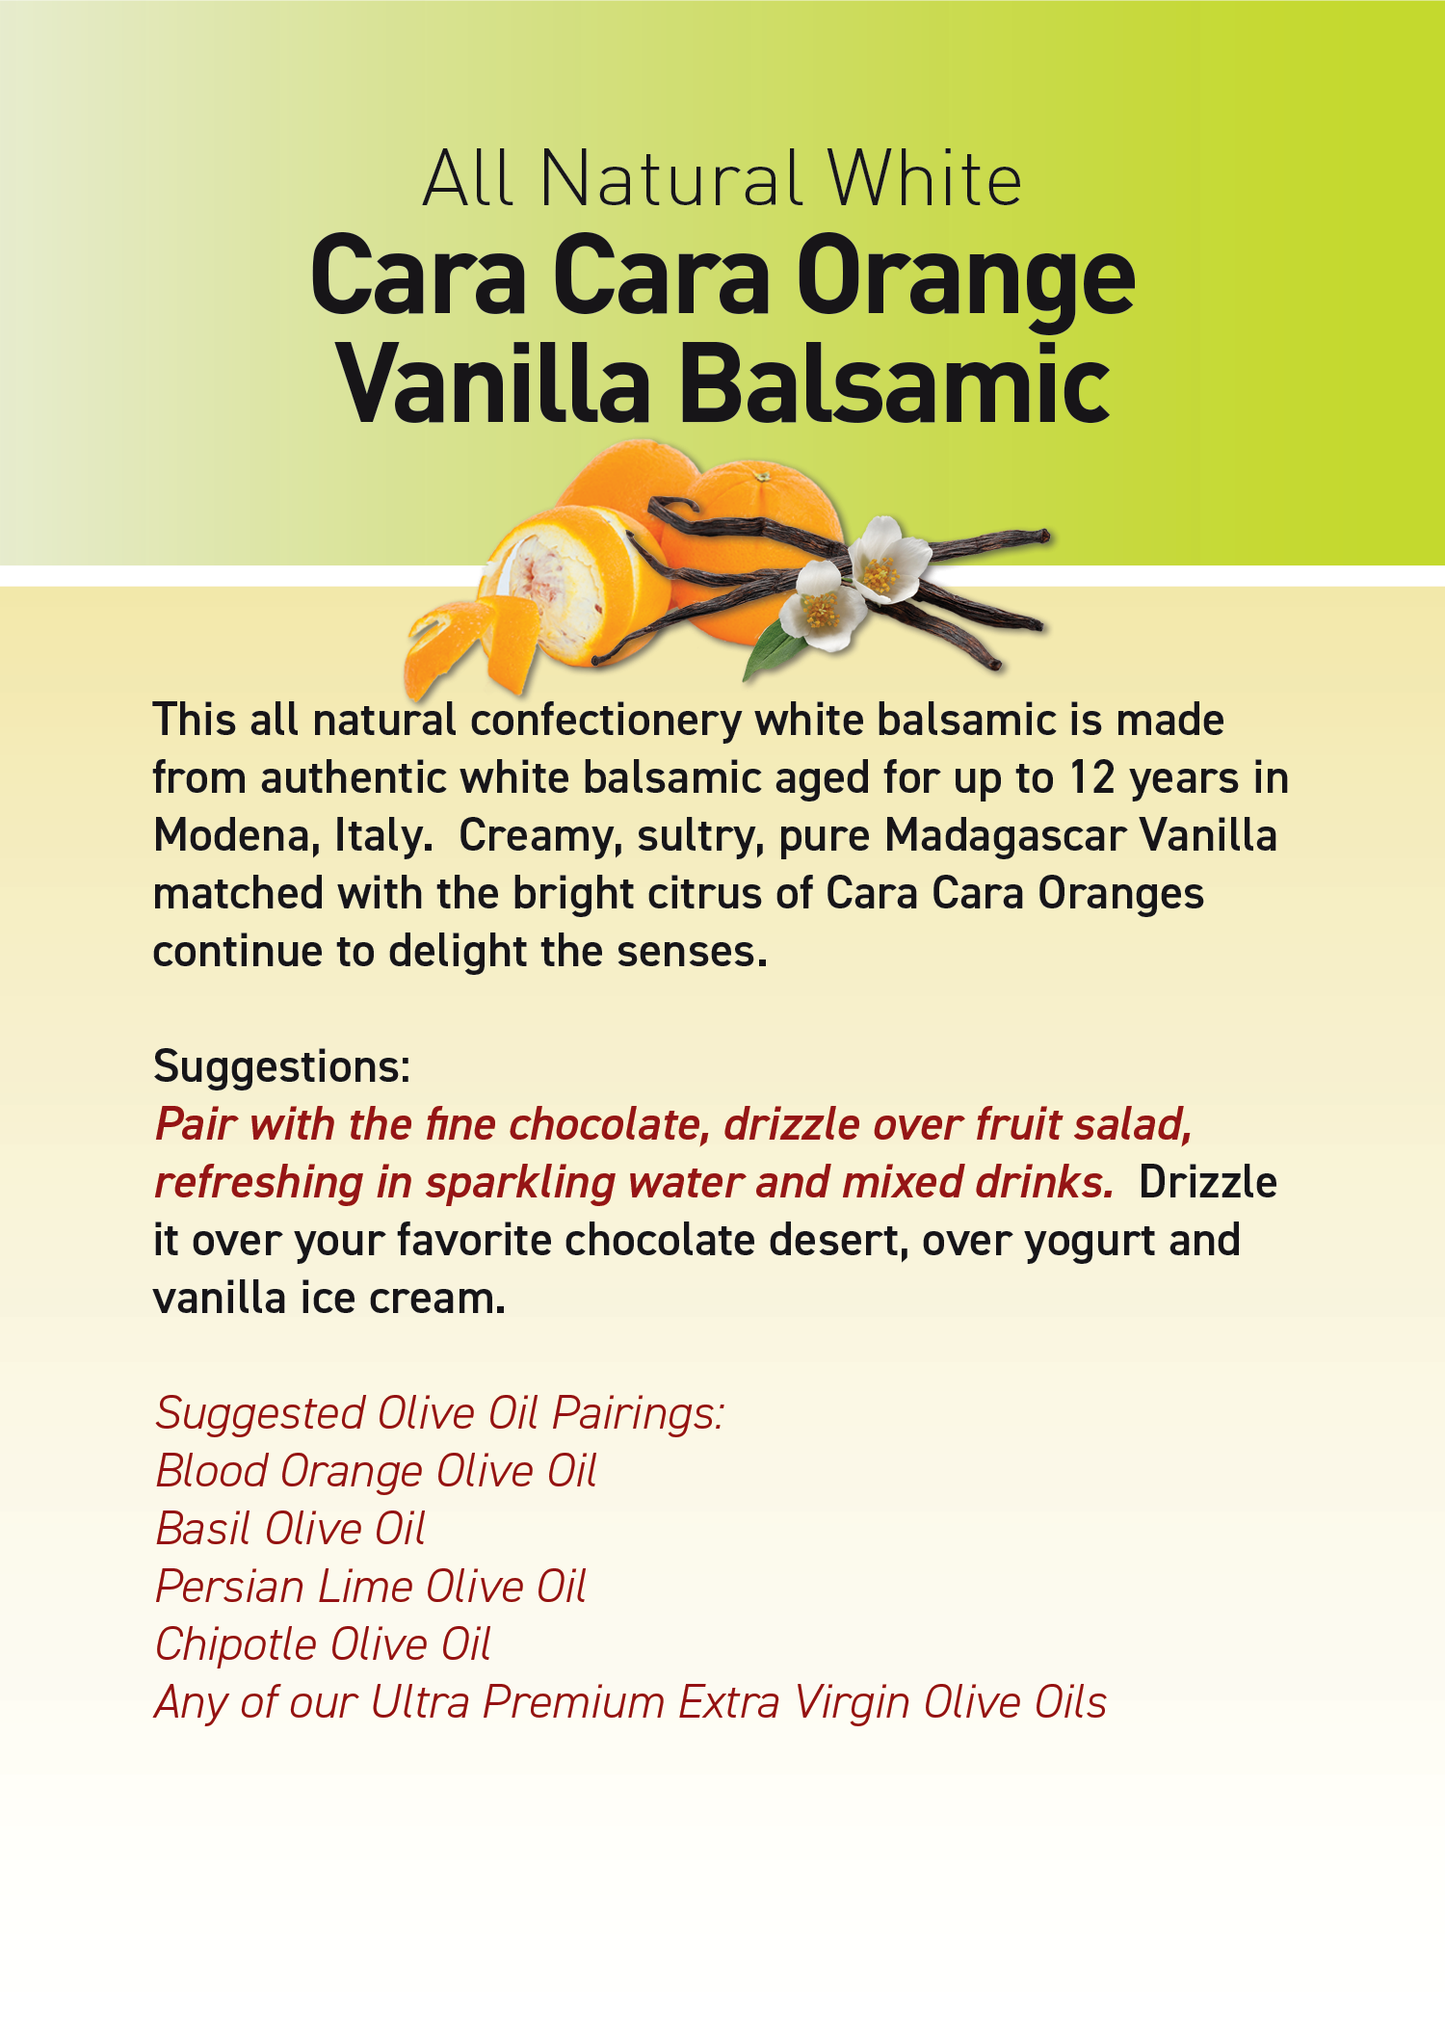 Cara Cara Orange-Vanilla Balsamic